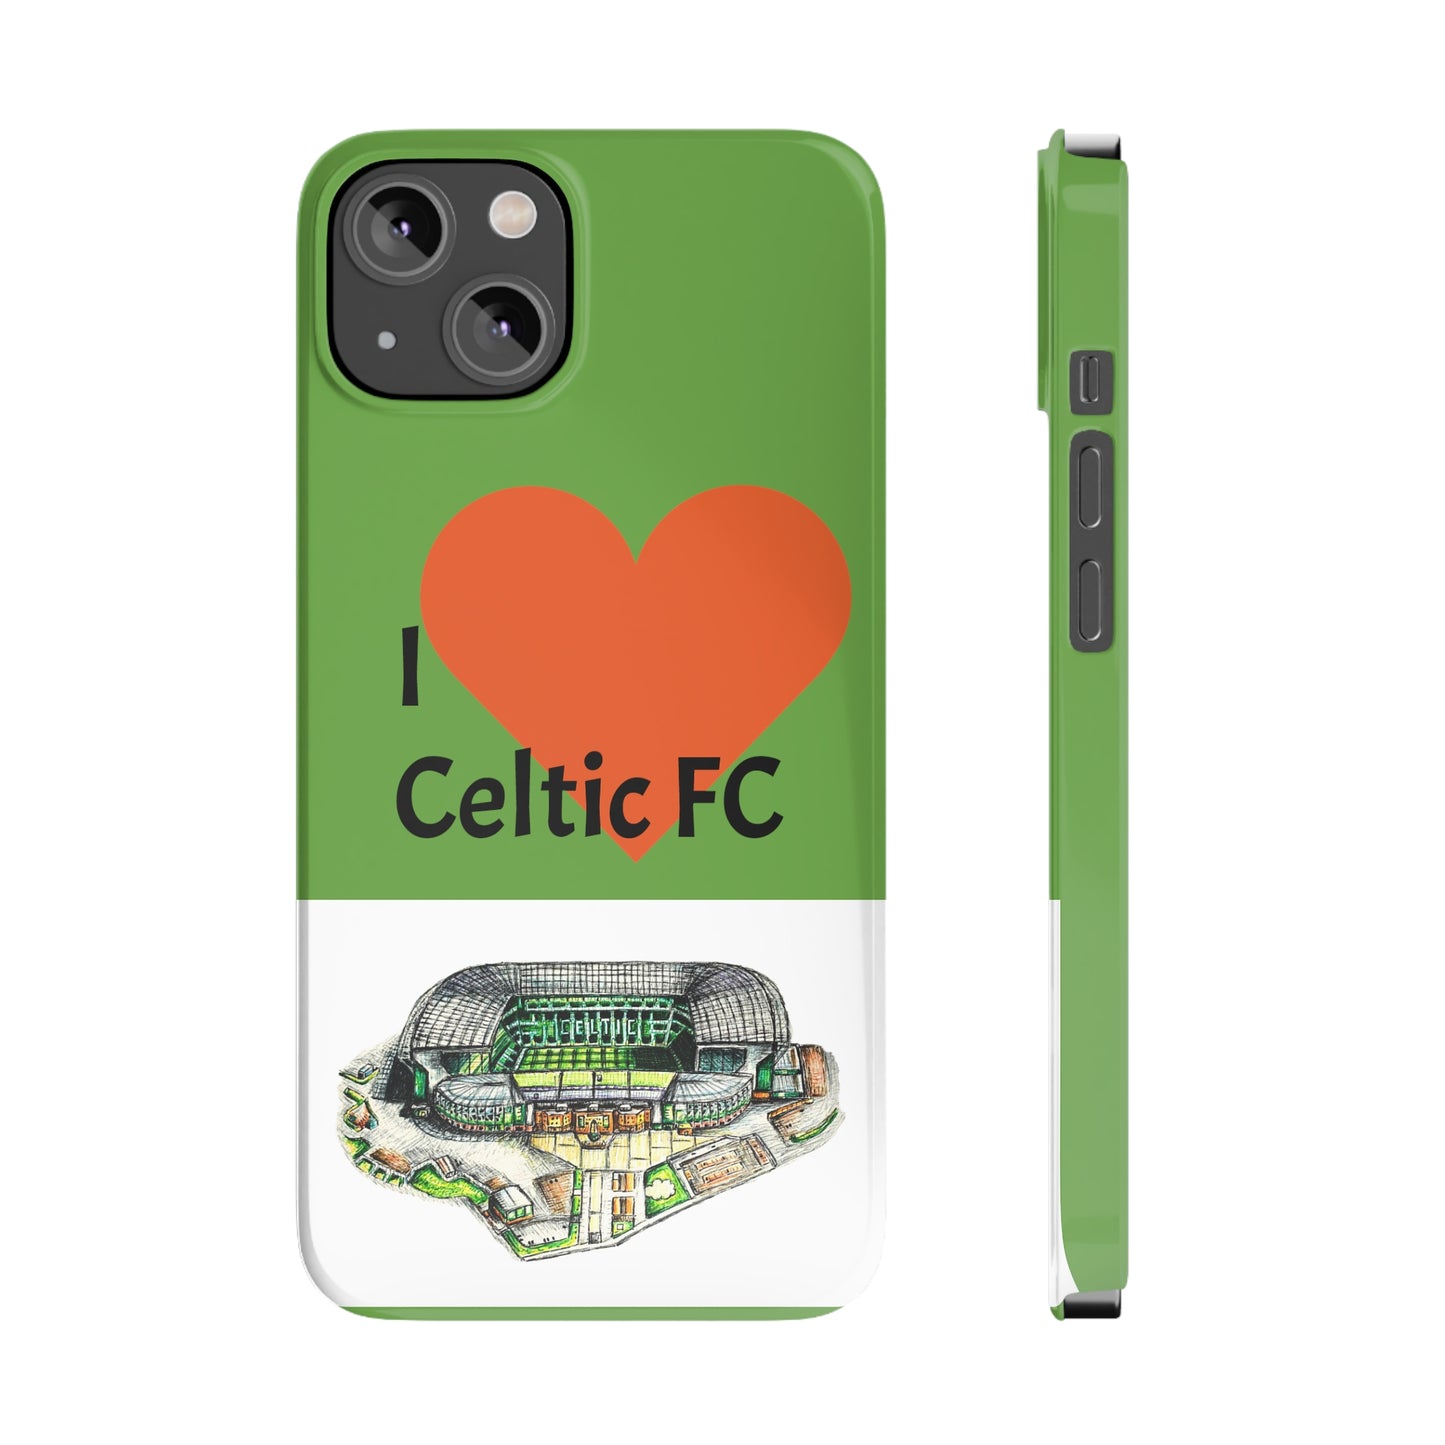 Slim Phone Case- I Love Celtic FC Design